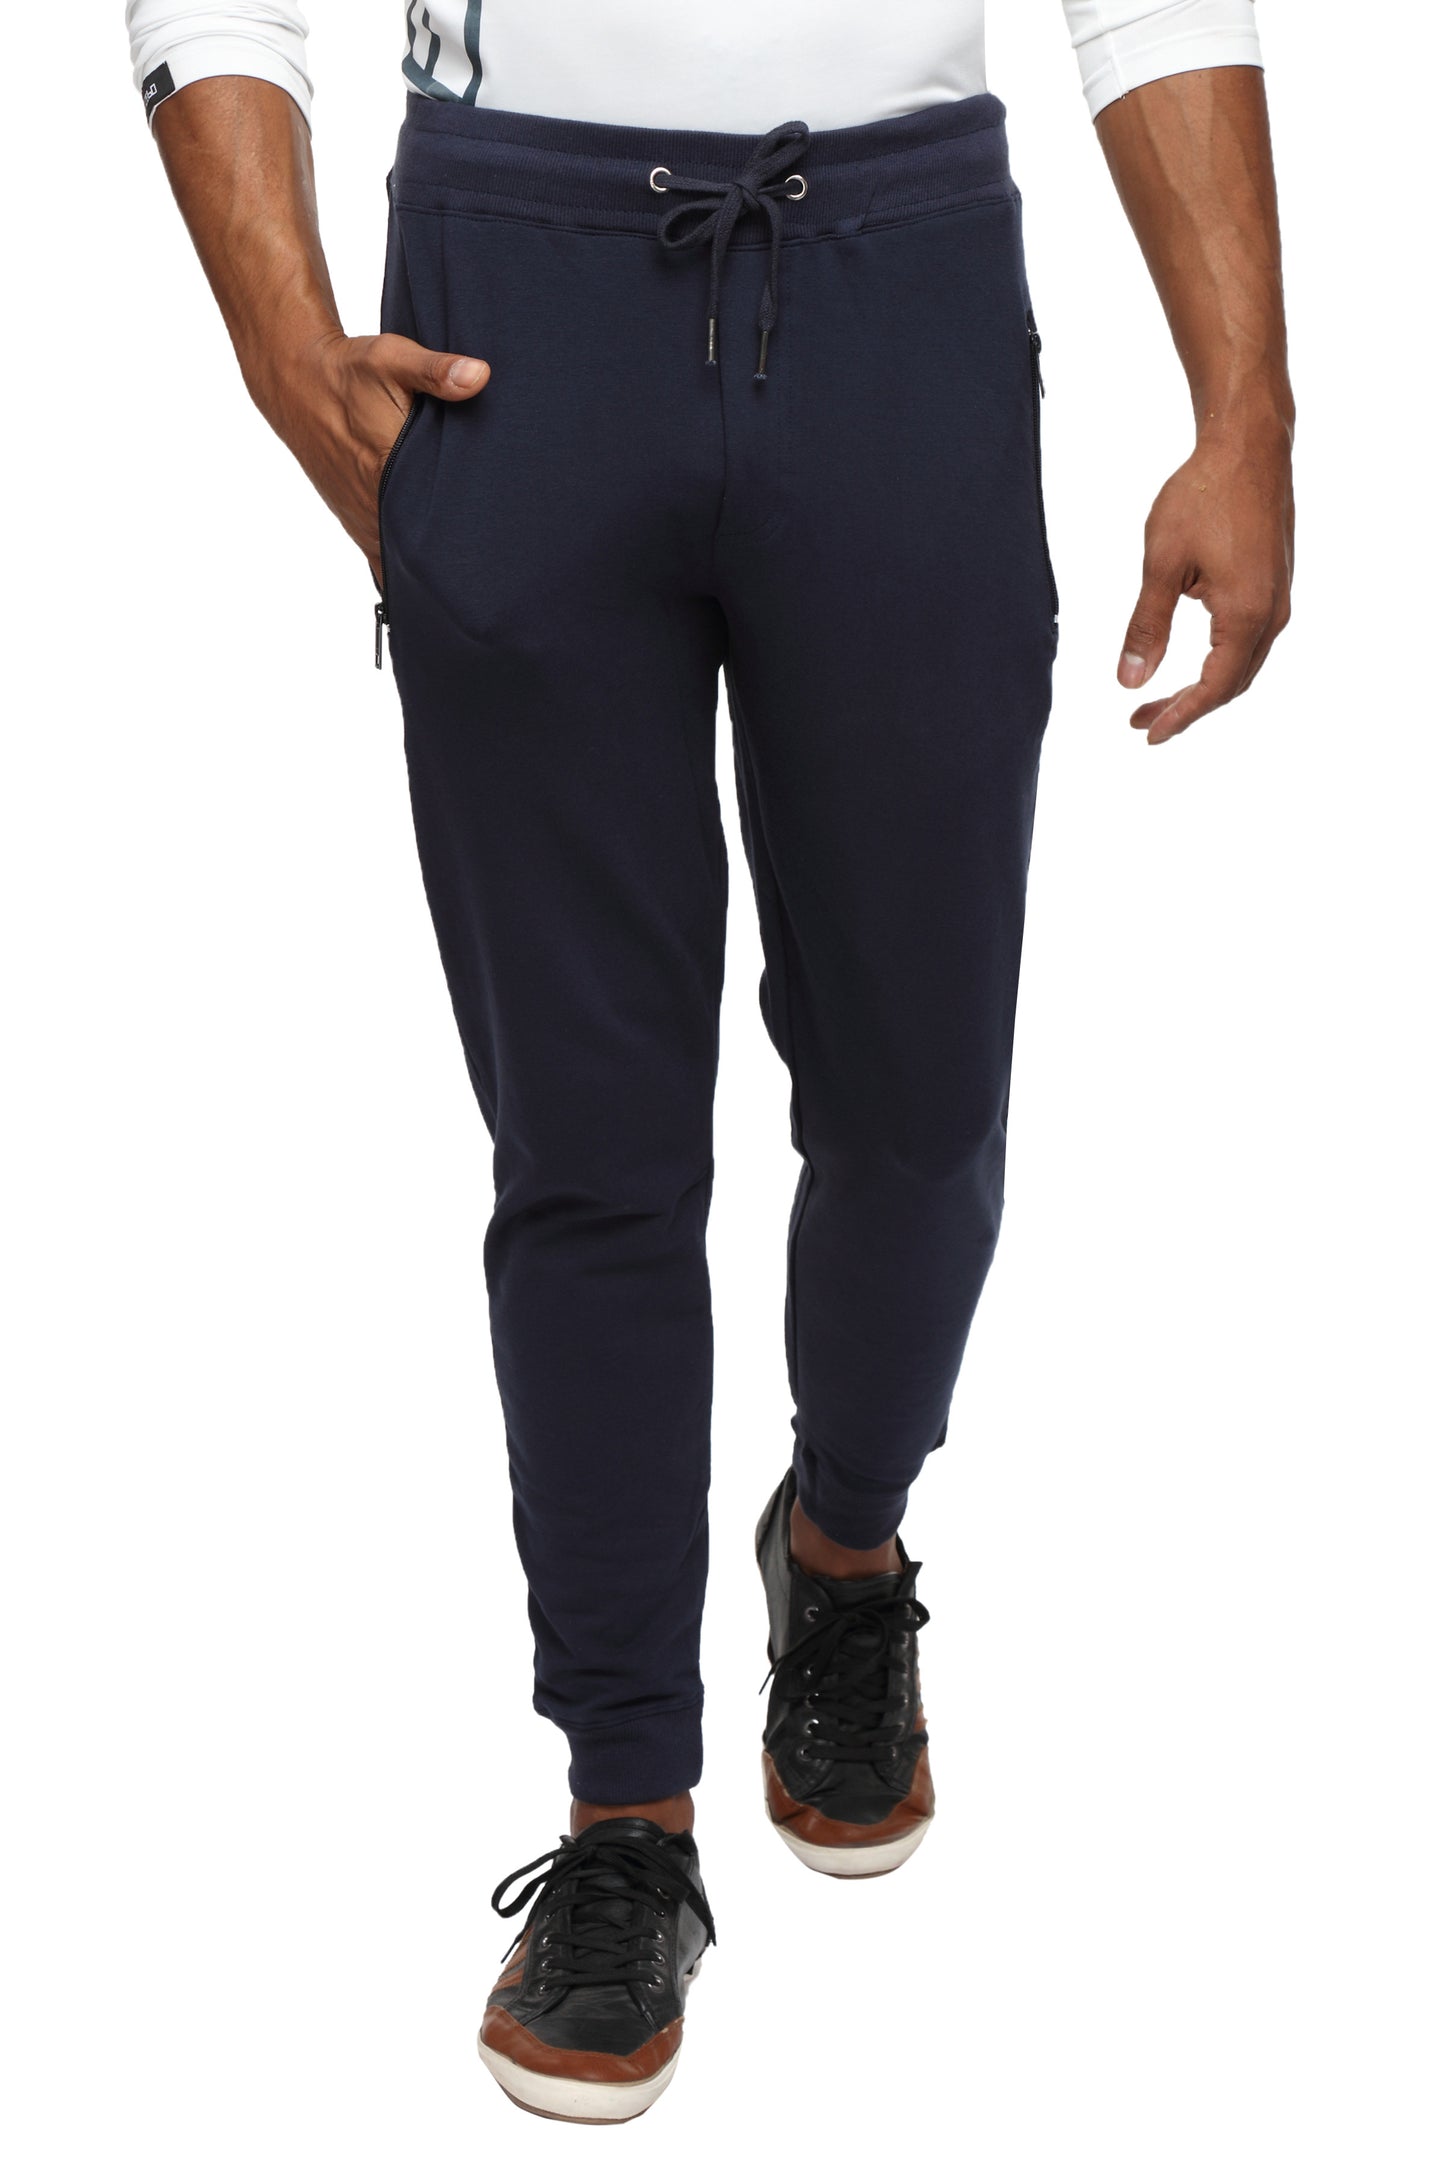 Slim fit cotton Joggers- Navy Blue - Zebo Active Wear